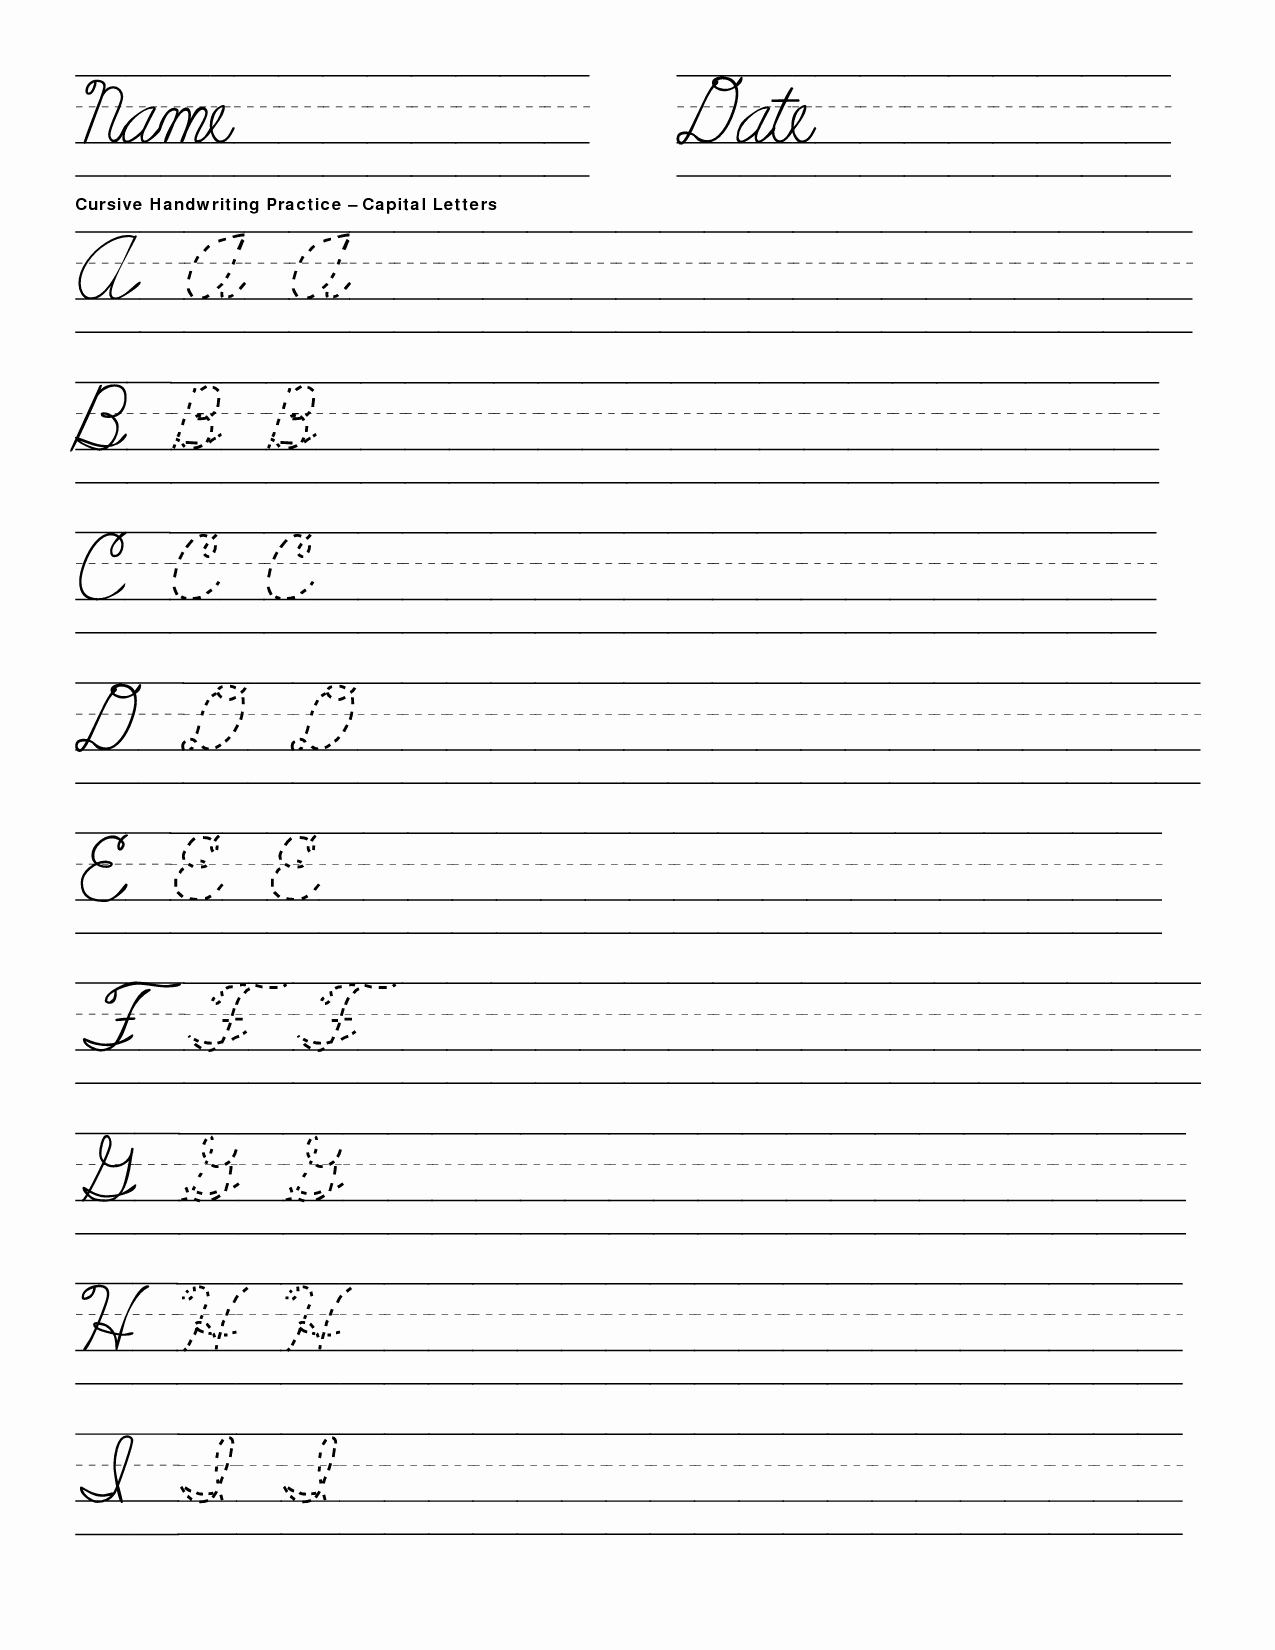 Cursive Writing Worksheet Elegant Free Printable Cursive Handwriting Practice Sheets